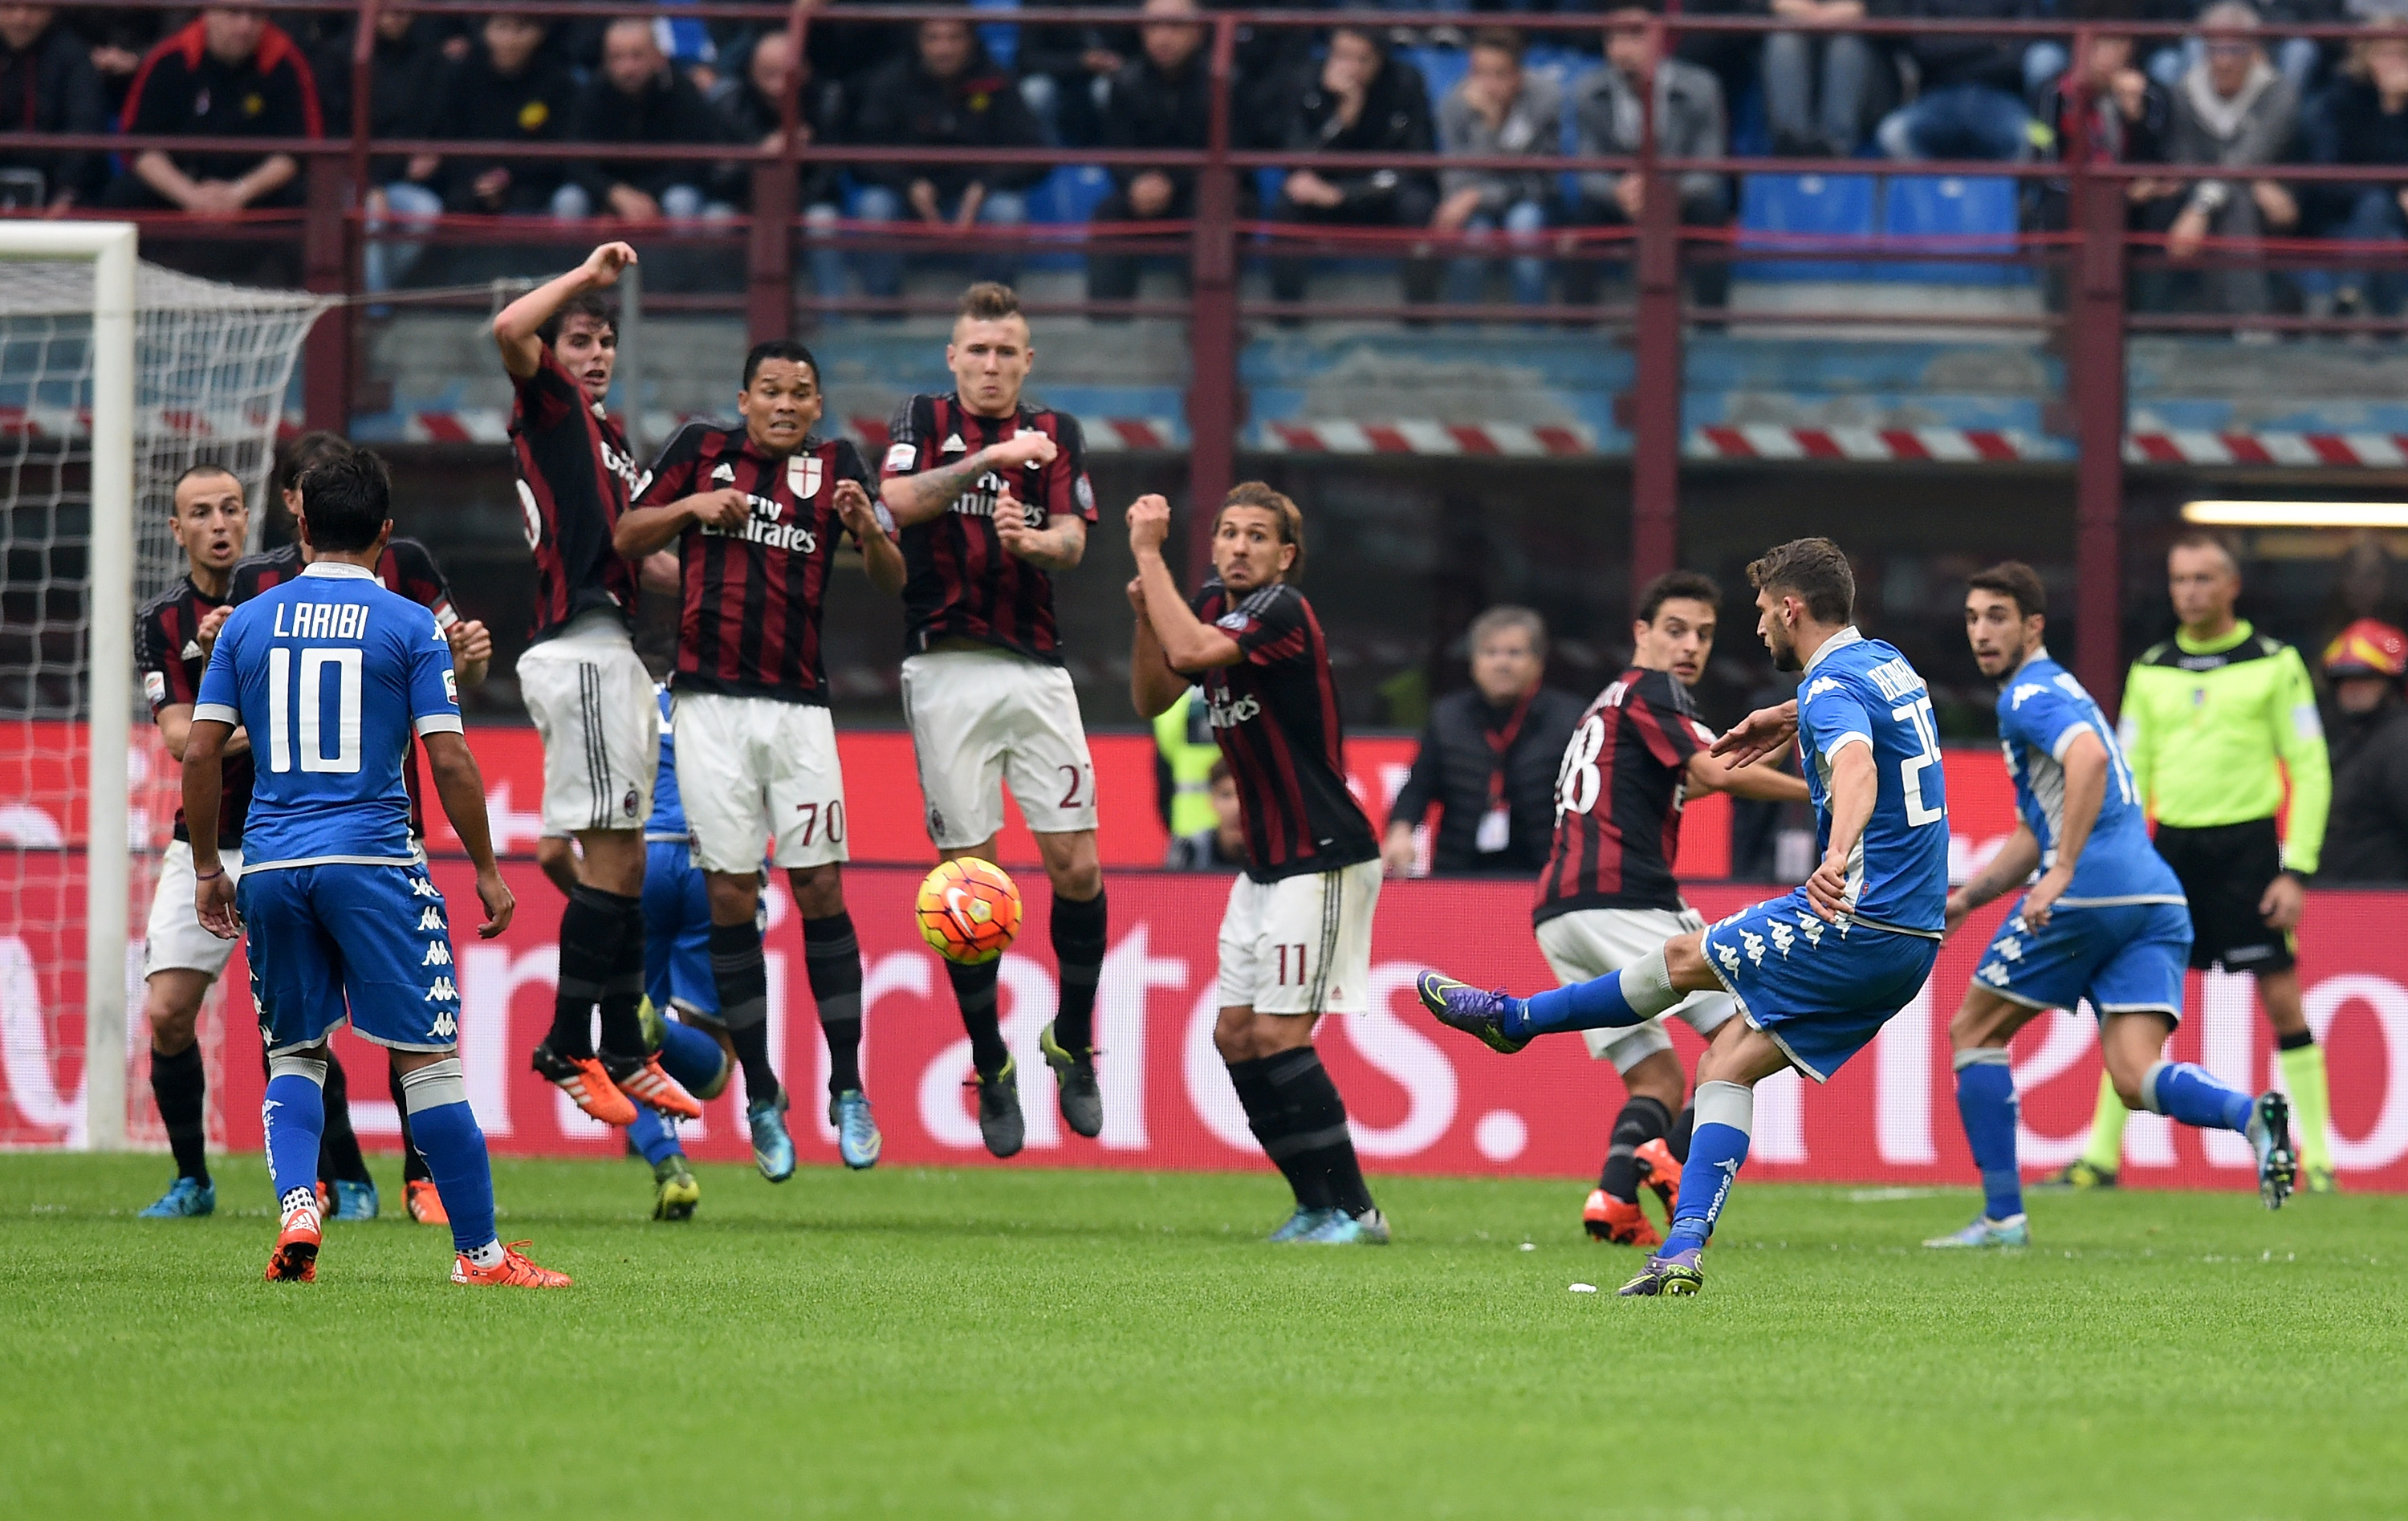 16-годишен вратар дебютира за Милан при победата с 2:1 над Сасуоло